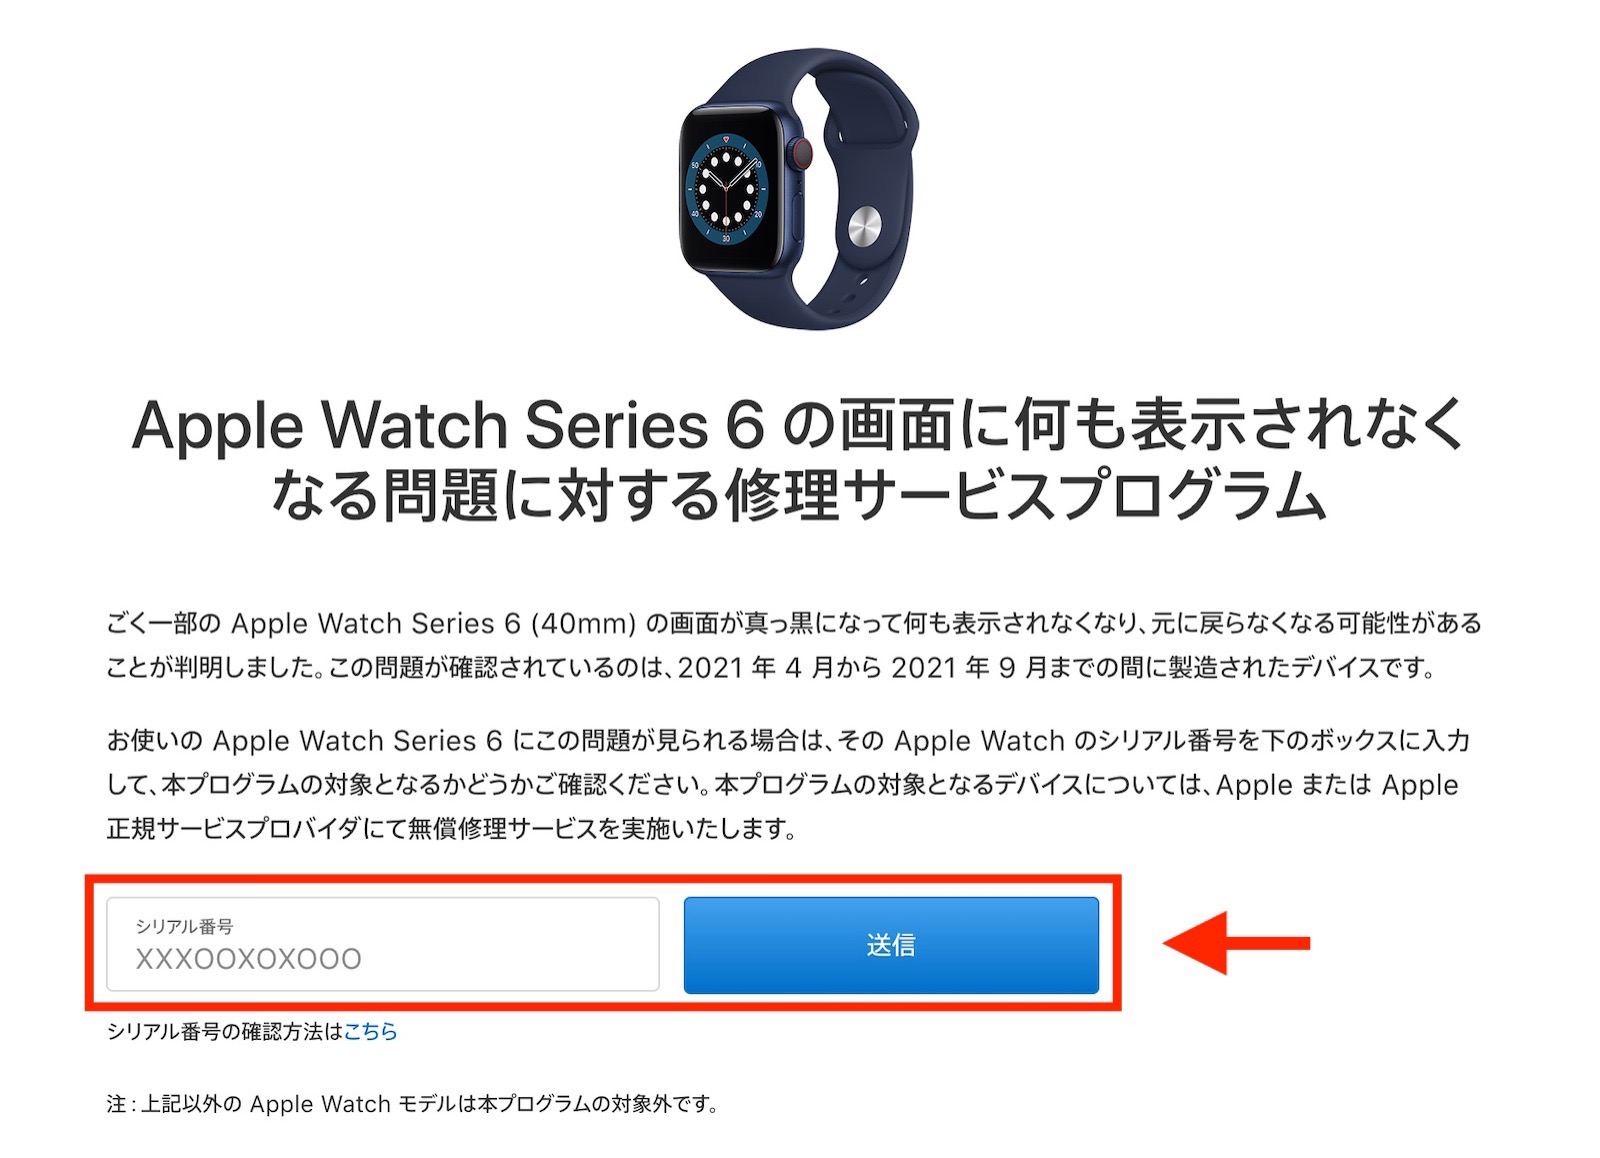 Apple Watch Series 6 Blackout program